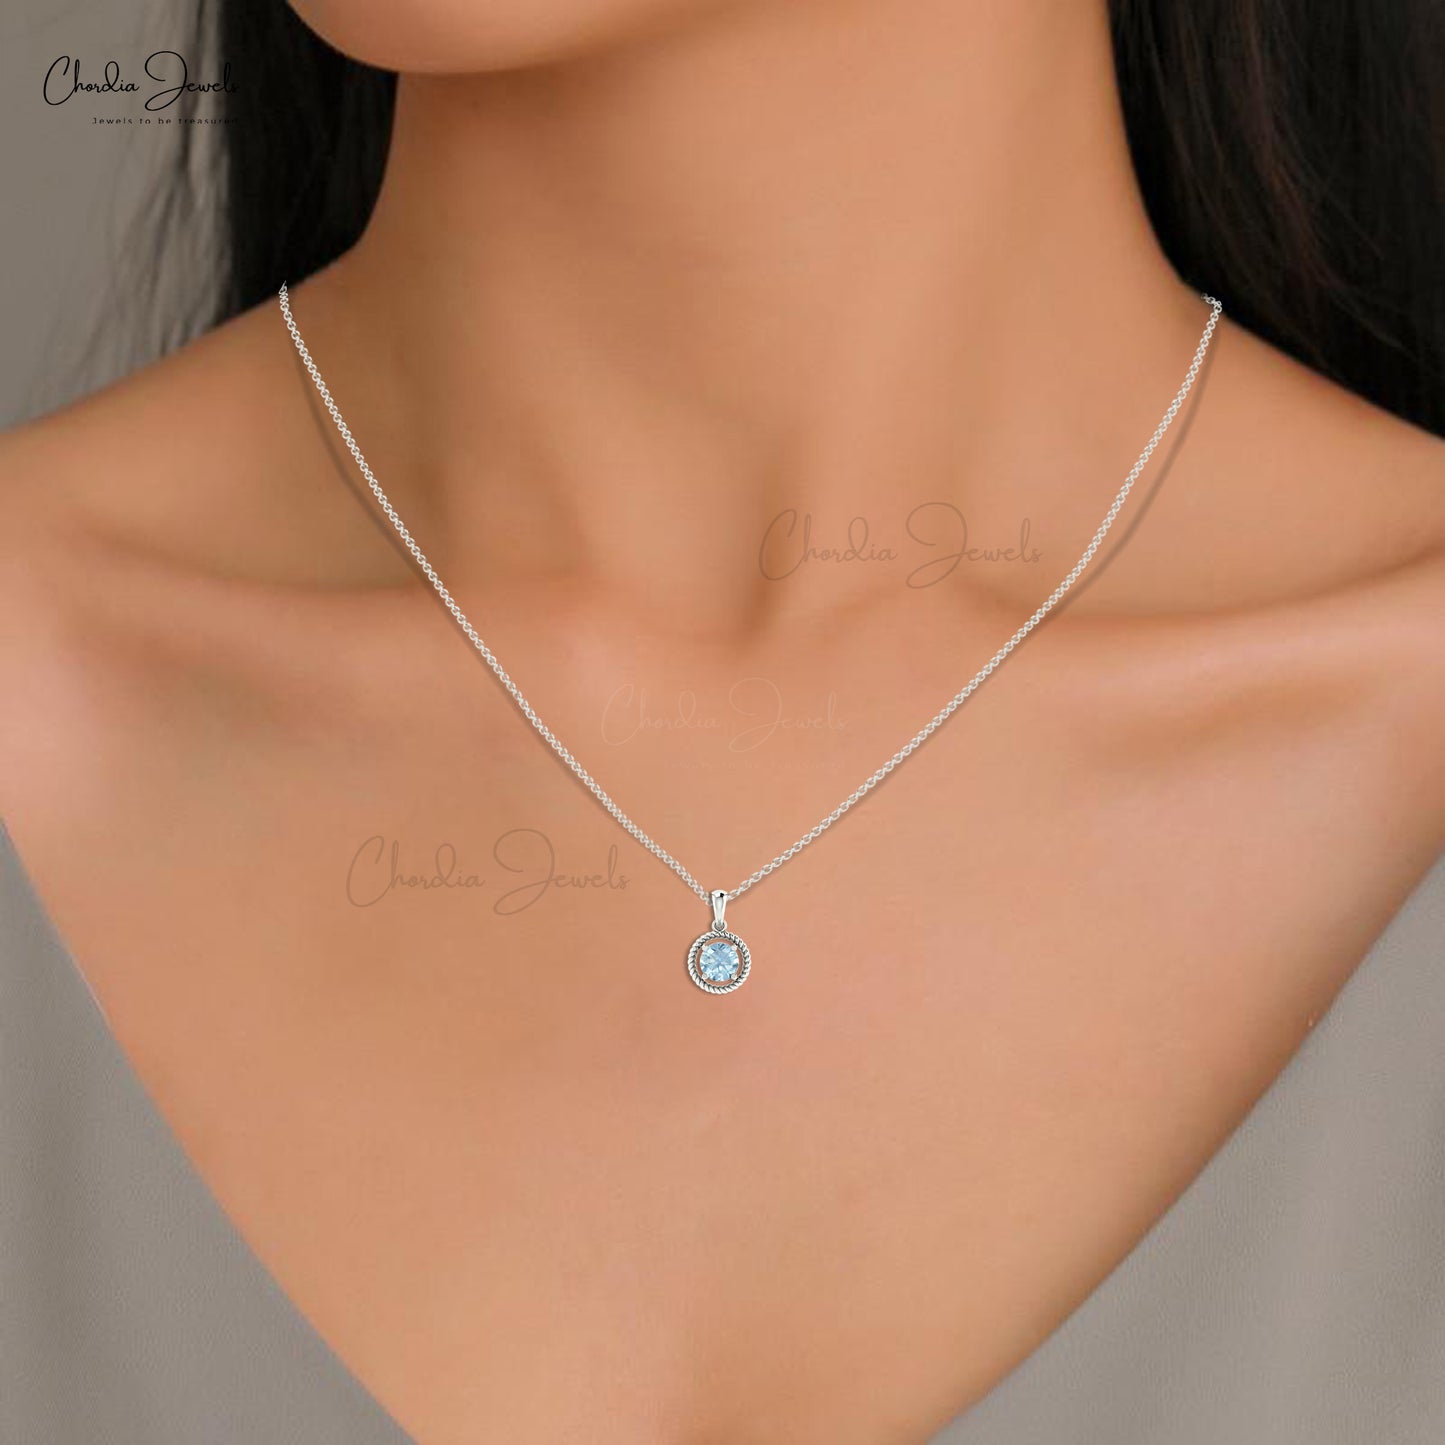 Elegant Aquamarine Spiral Pendant 14k Real Gold 0.45ct Gemstone Jewelry For Birthday Gift